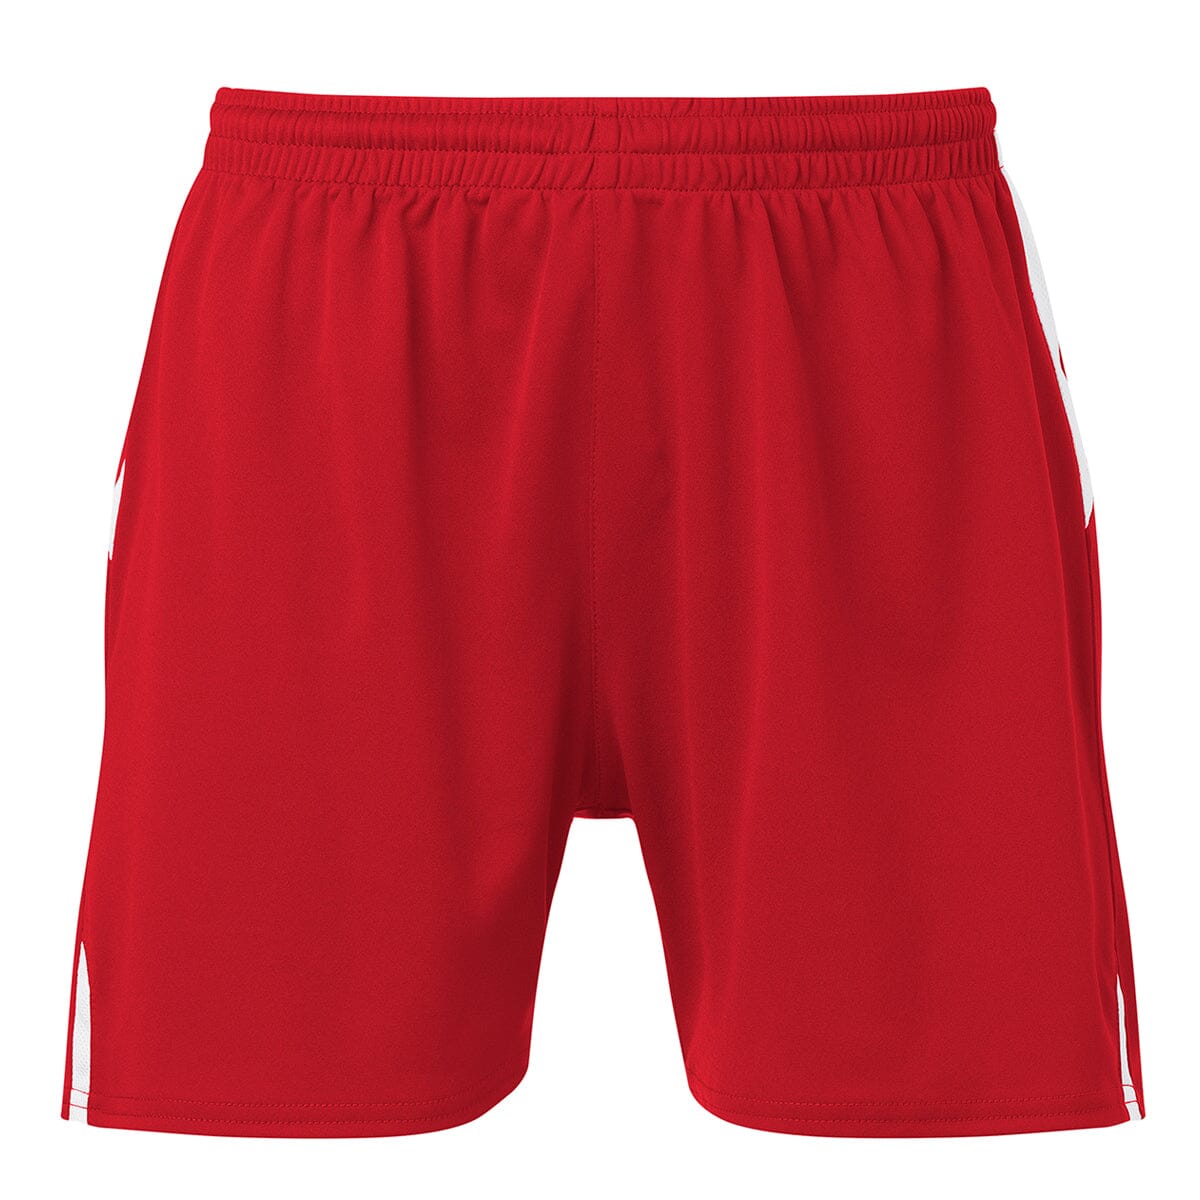 Continental Short - Female Short Xara Soccer Red/White Womens Small 